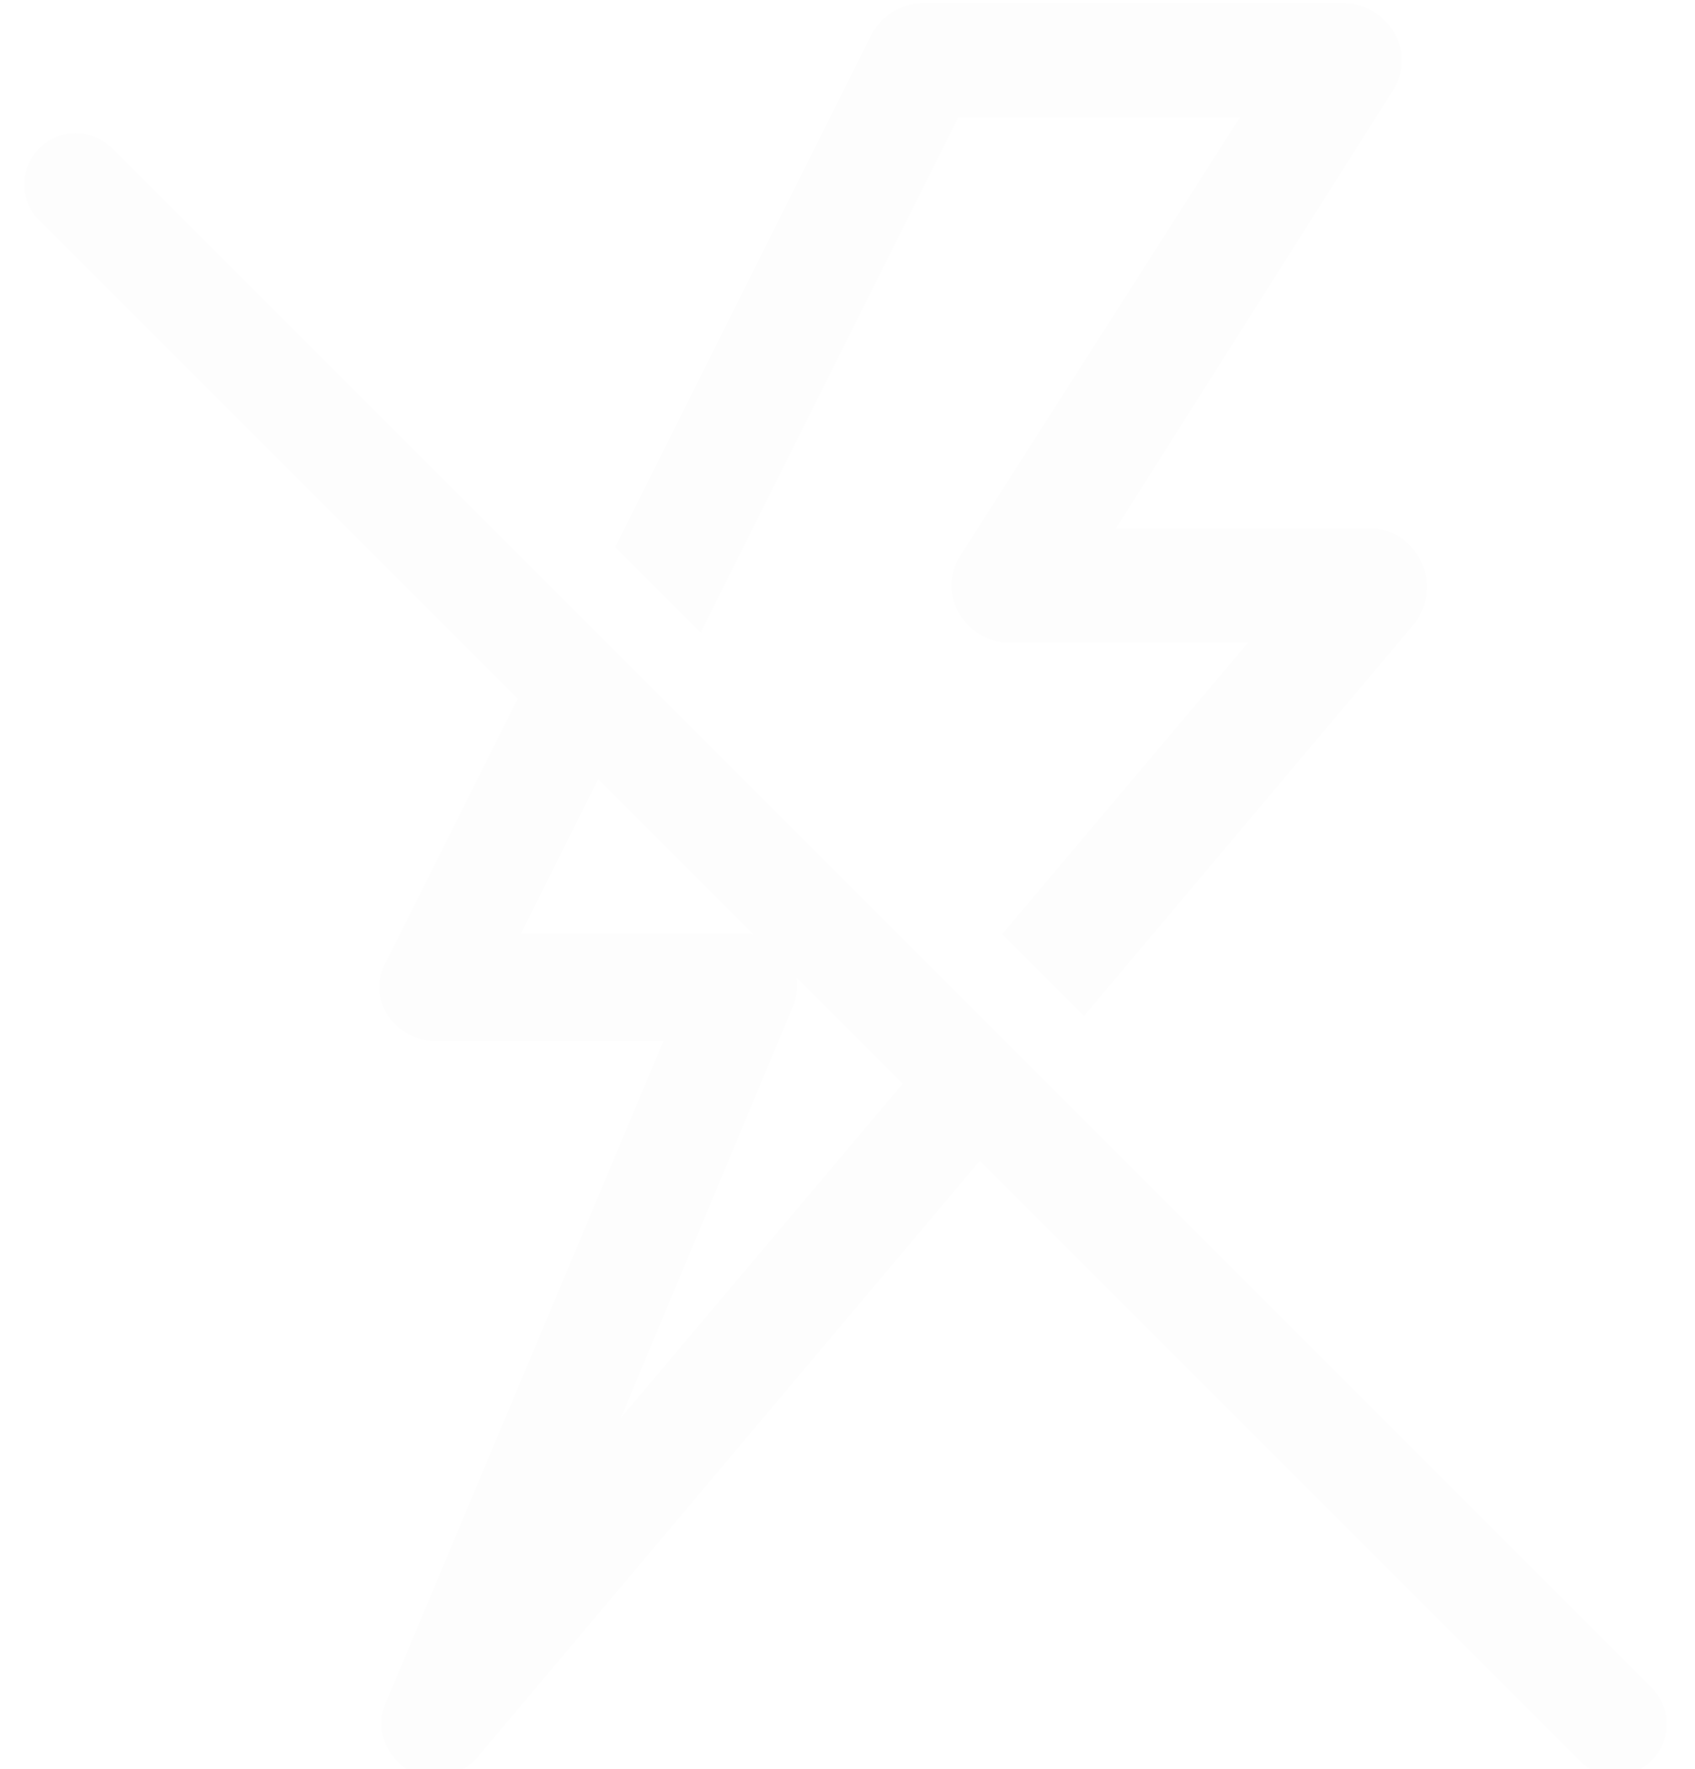 ViA-no-electricity-icon